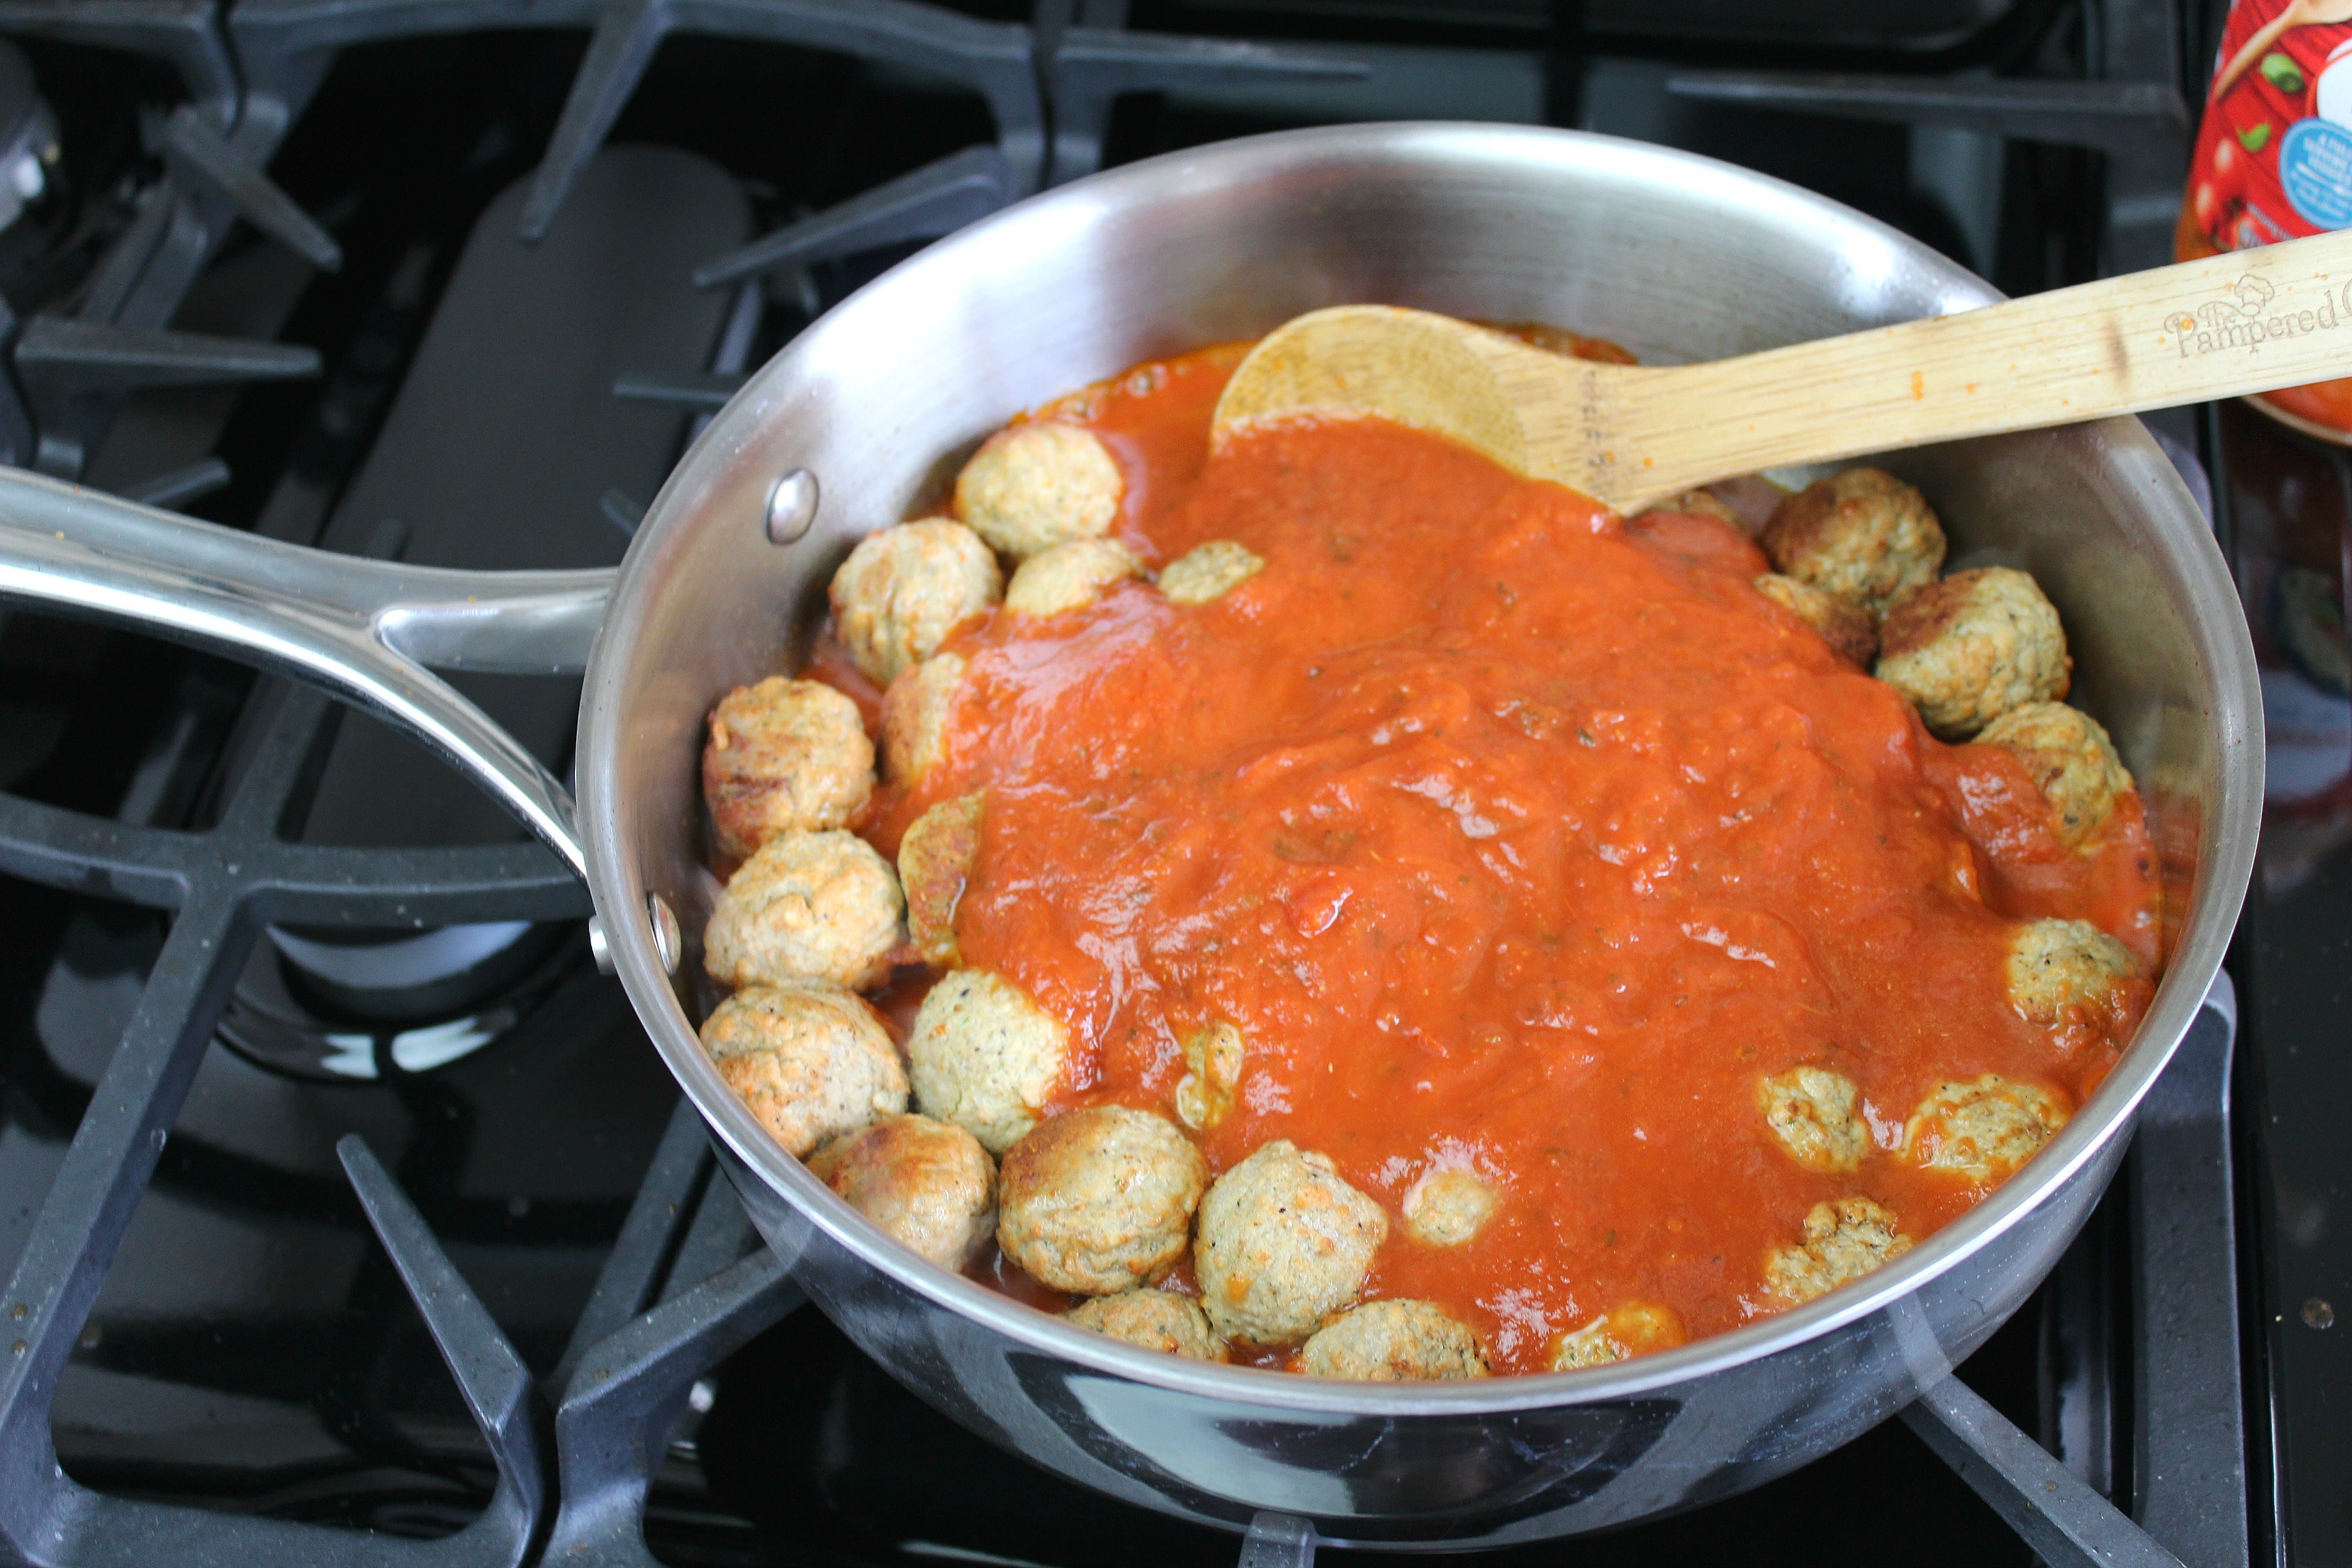 Add tomato sauce to pan over meatballs.